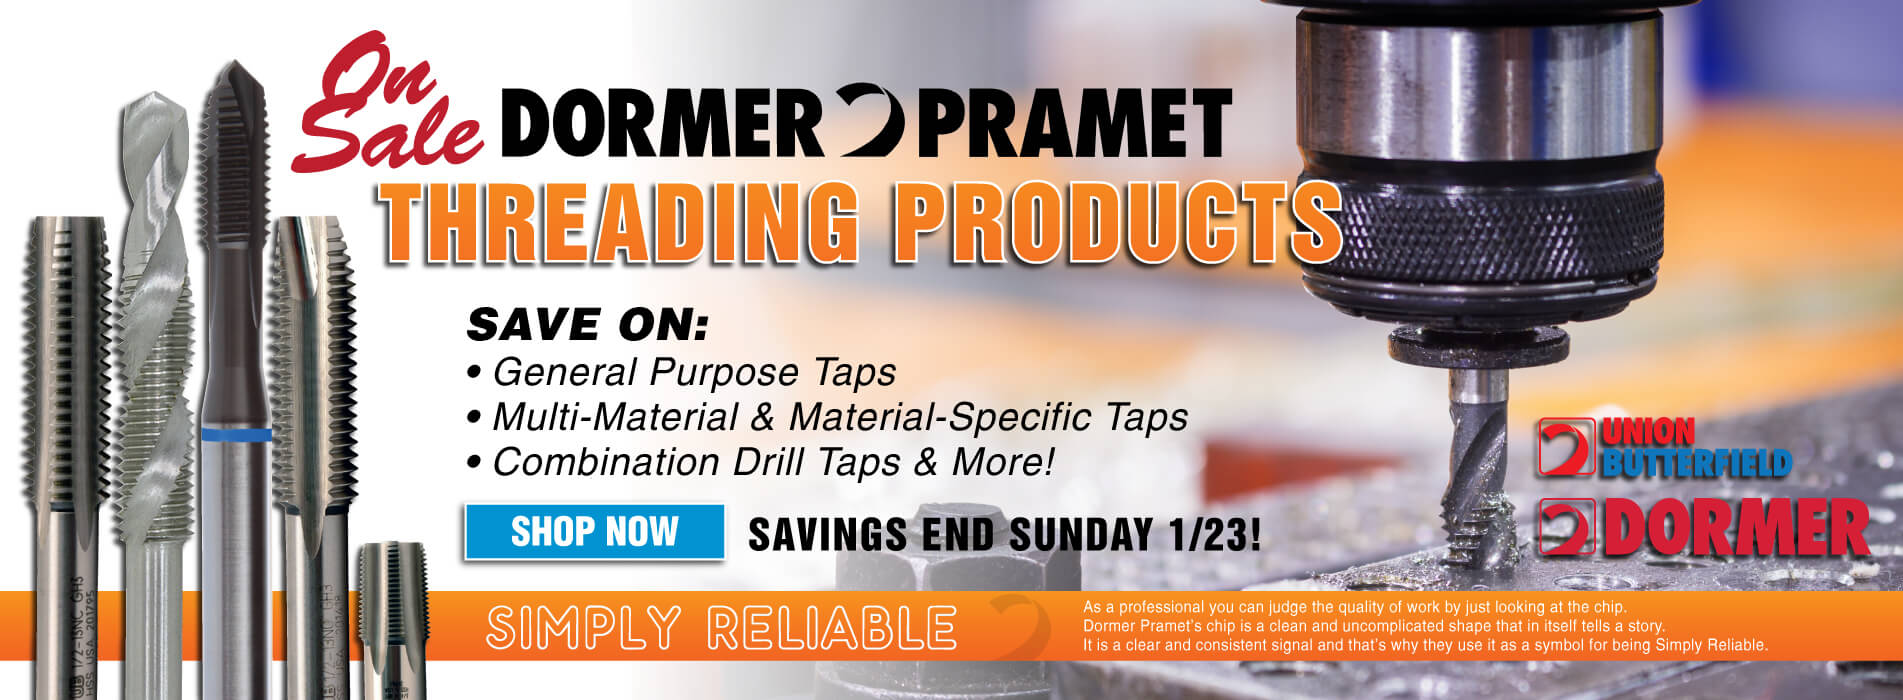 Dormer Pramet Threading Products On Sale